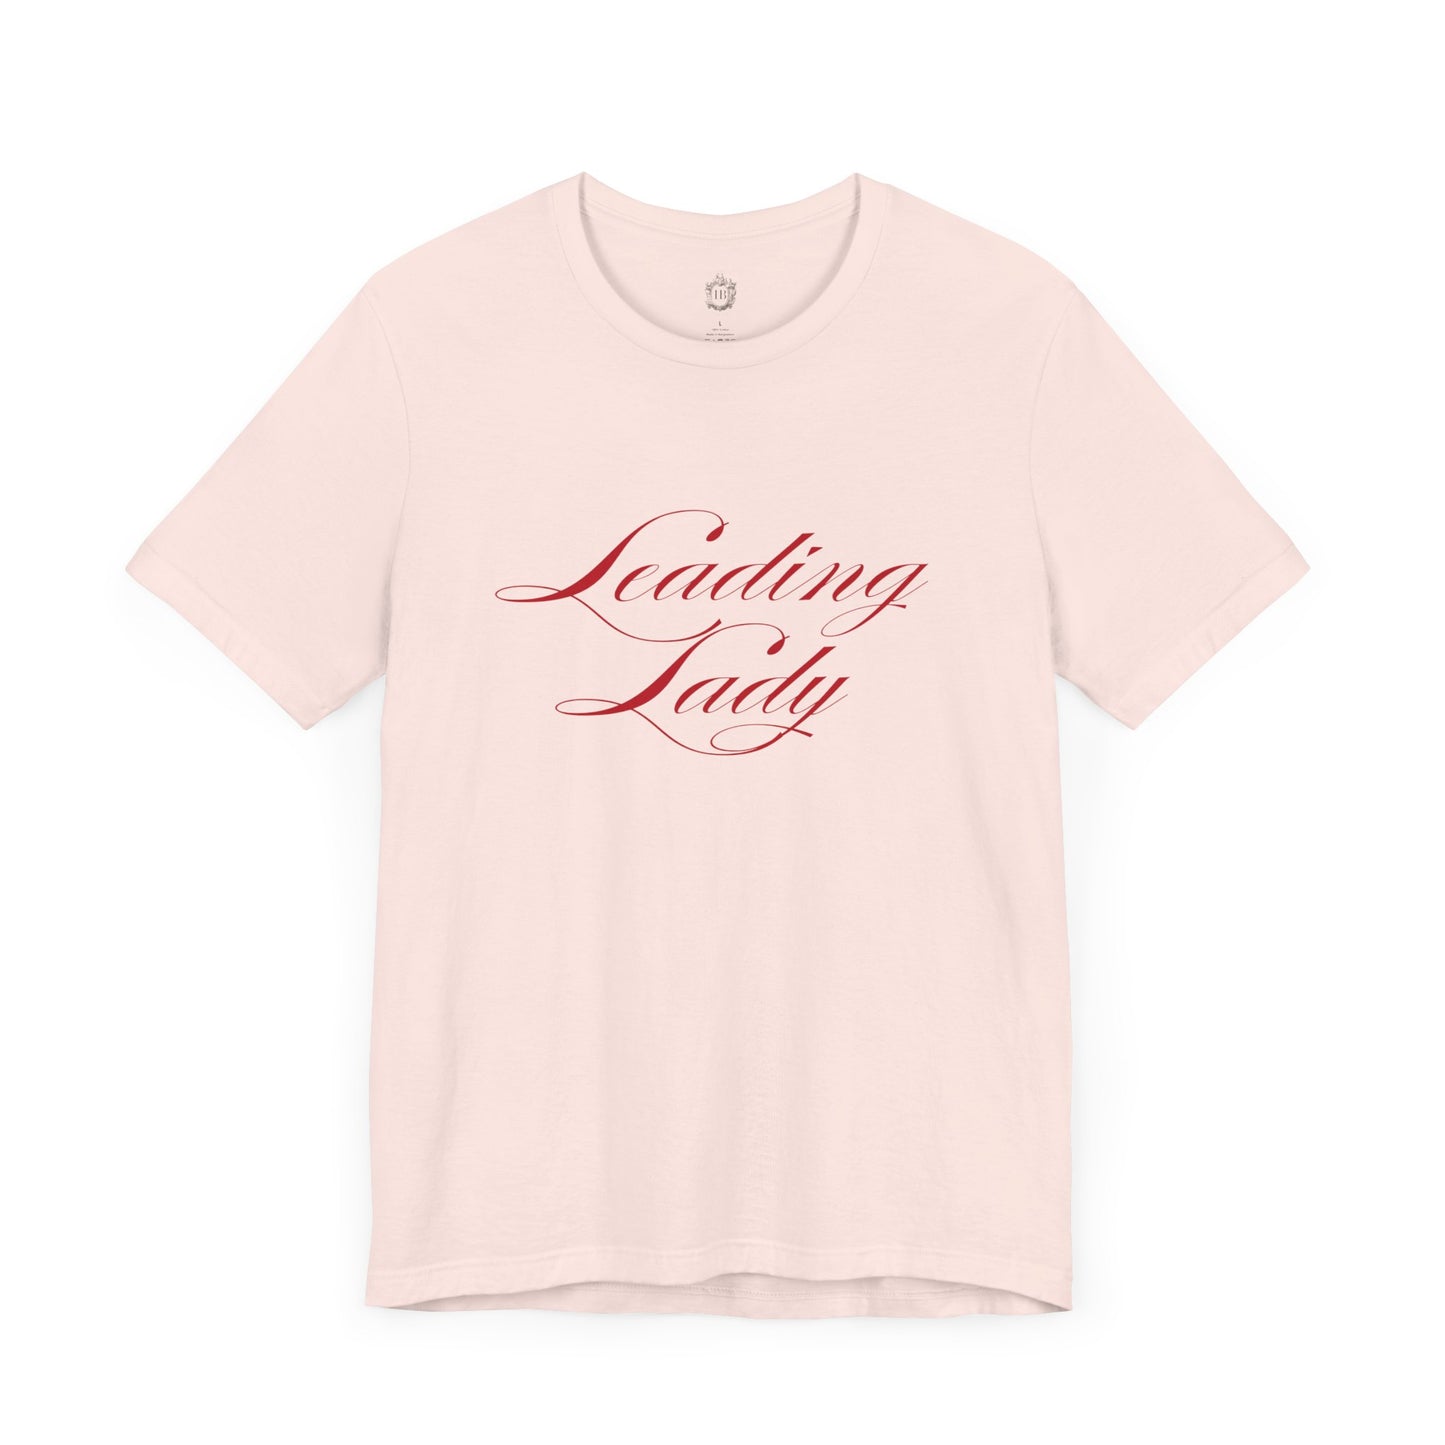 Leading Lady Tee